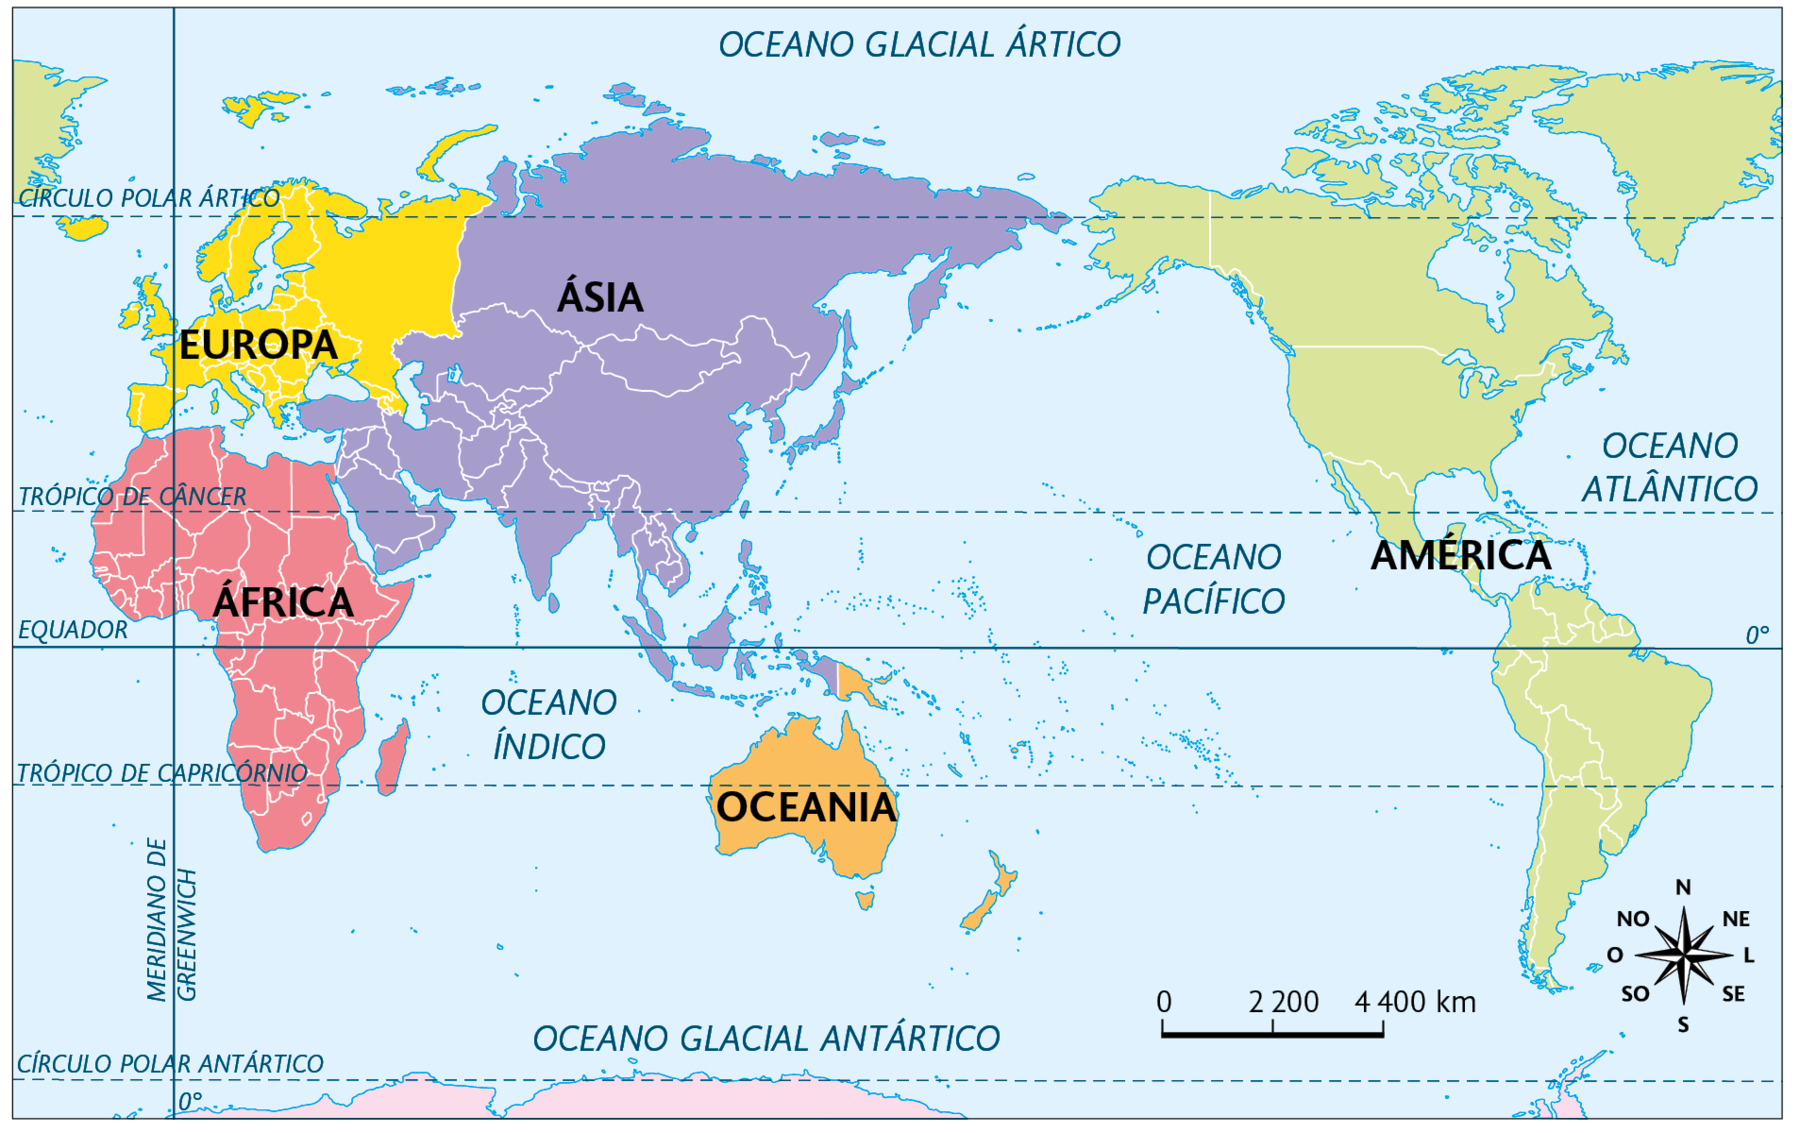 Mapa. O mundo visto a partir do oceano Pacífico. 
No oeste, a África e ao norte, a Europa. Ao centro, a Ásia e a Oceania. Na porção leste, a América. No canto inferior direito, a rosa dos ventos e ao lado, a escala: 2200 quilômetros por centímetro.